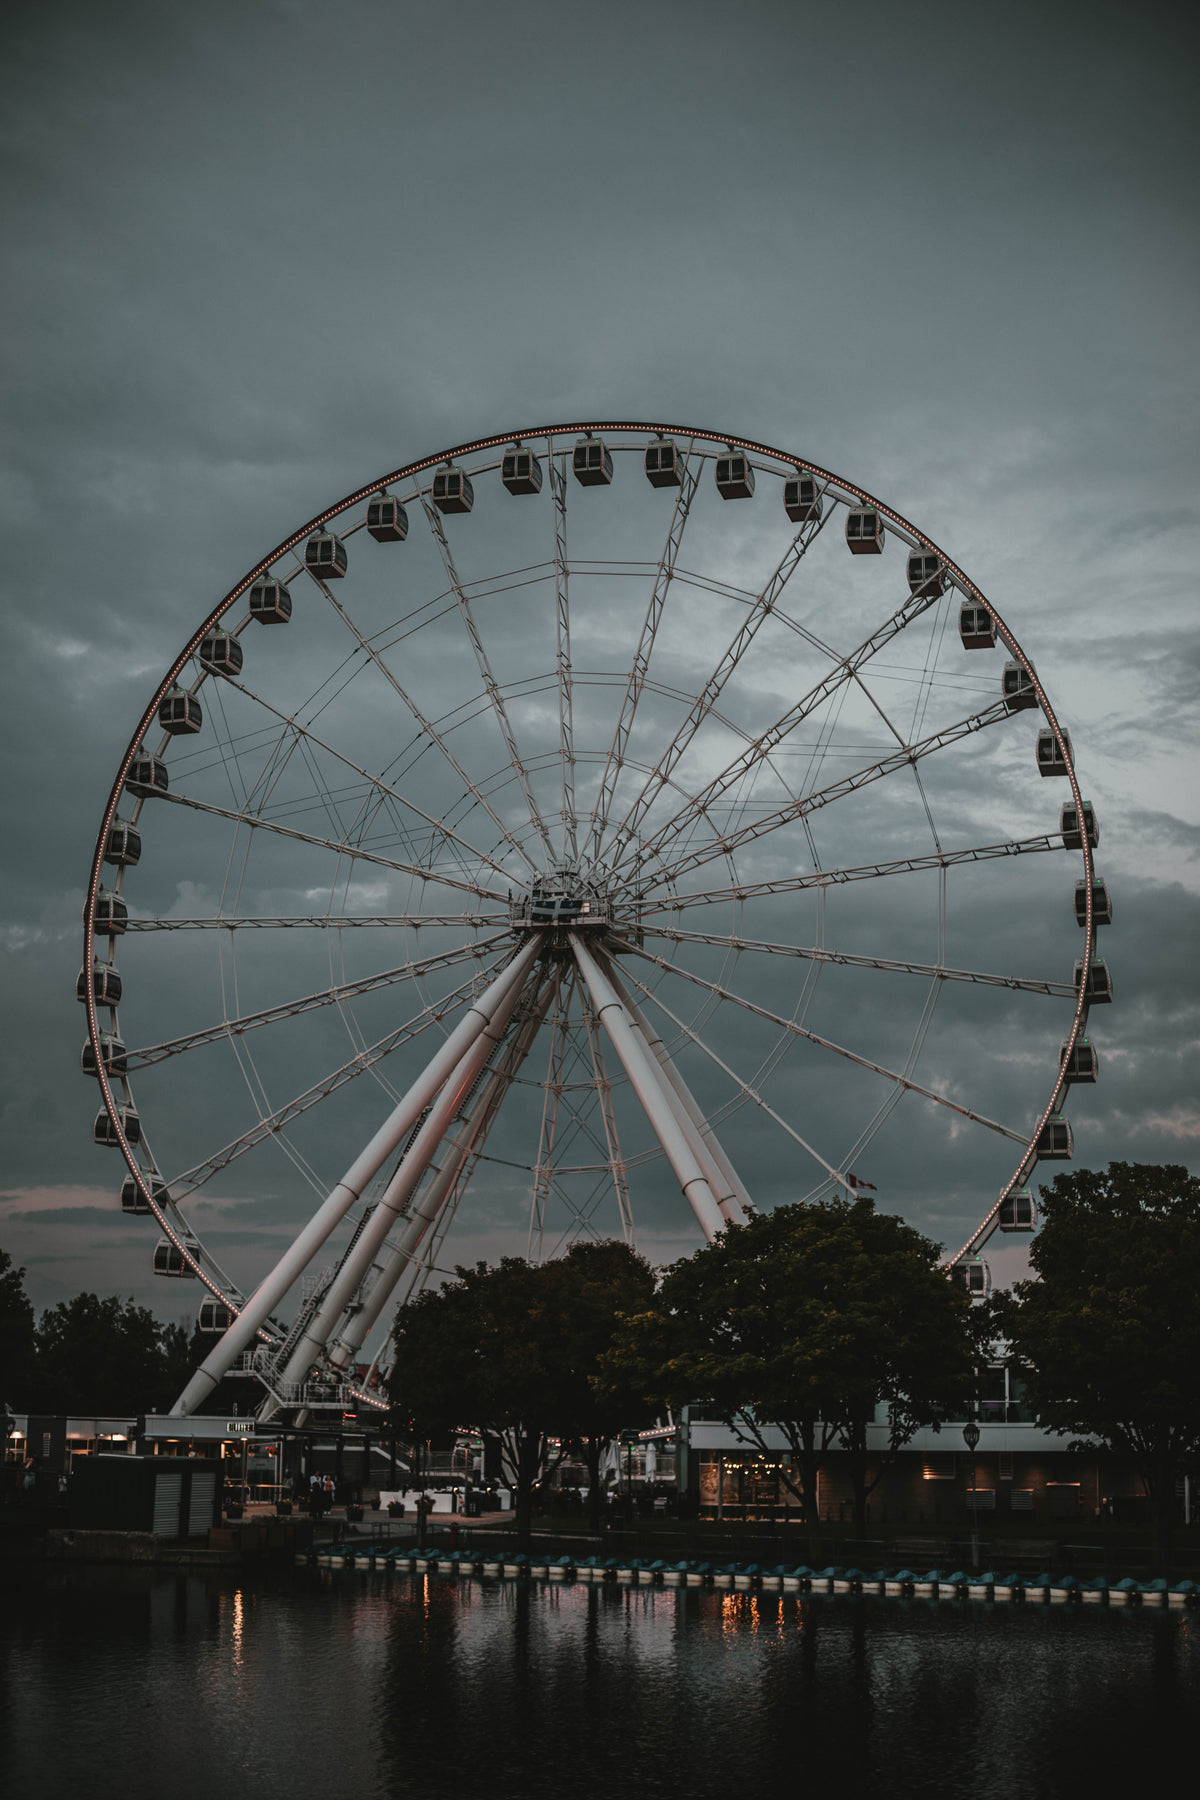 wheel of carnival